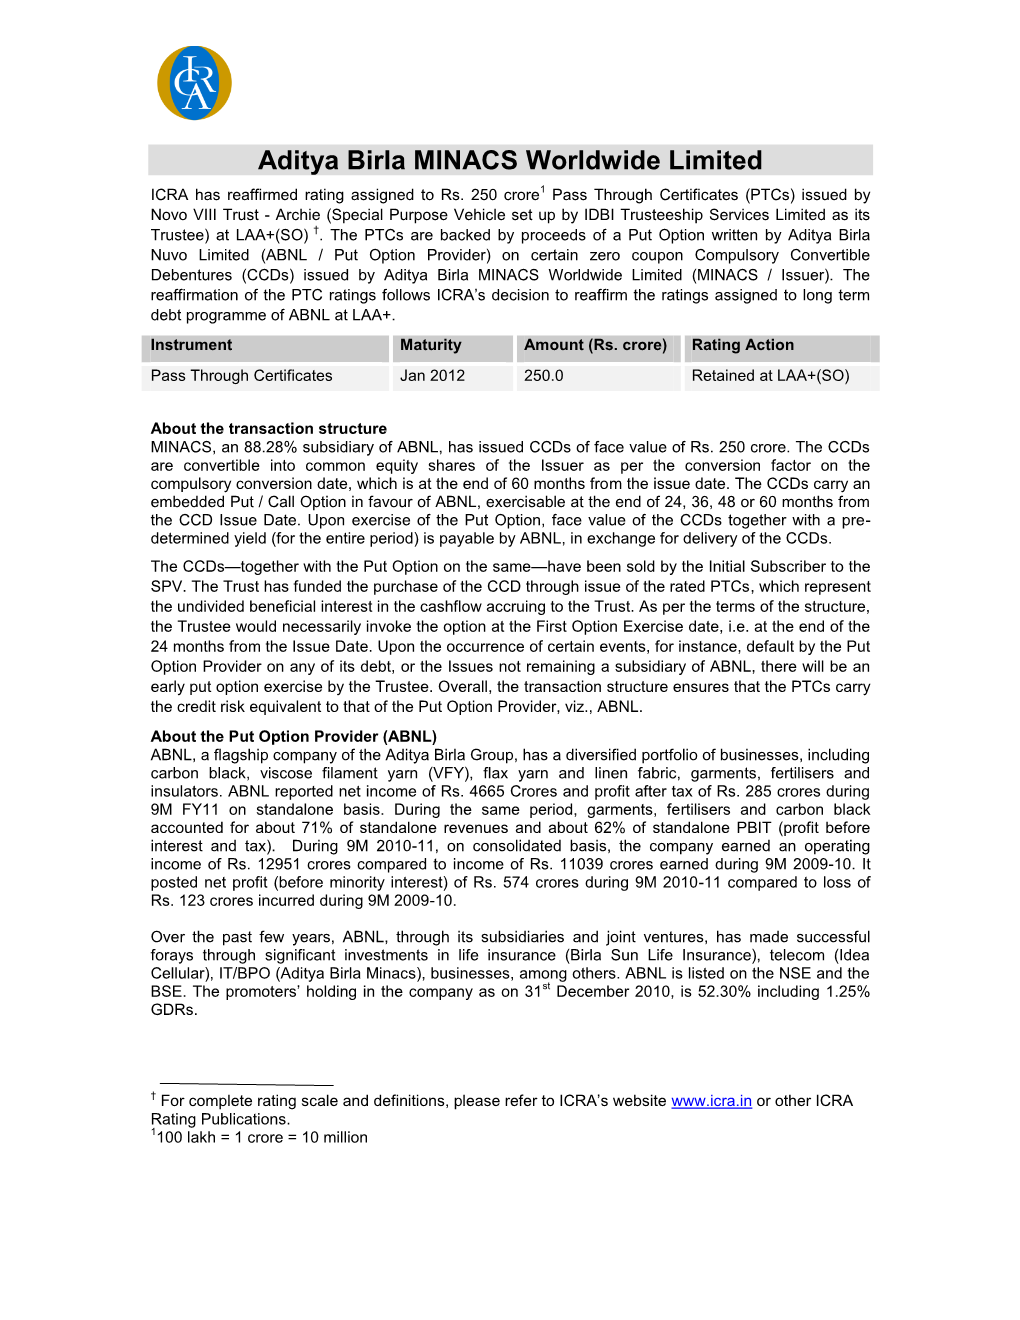 Aditya Birla MINACS Worldwide Limited ICRA Has Reaffirmed Rating Assigned to Rs